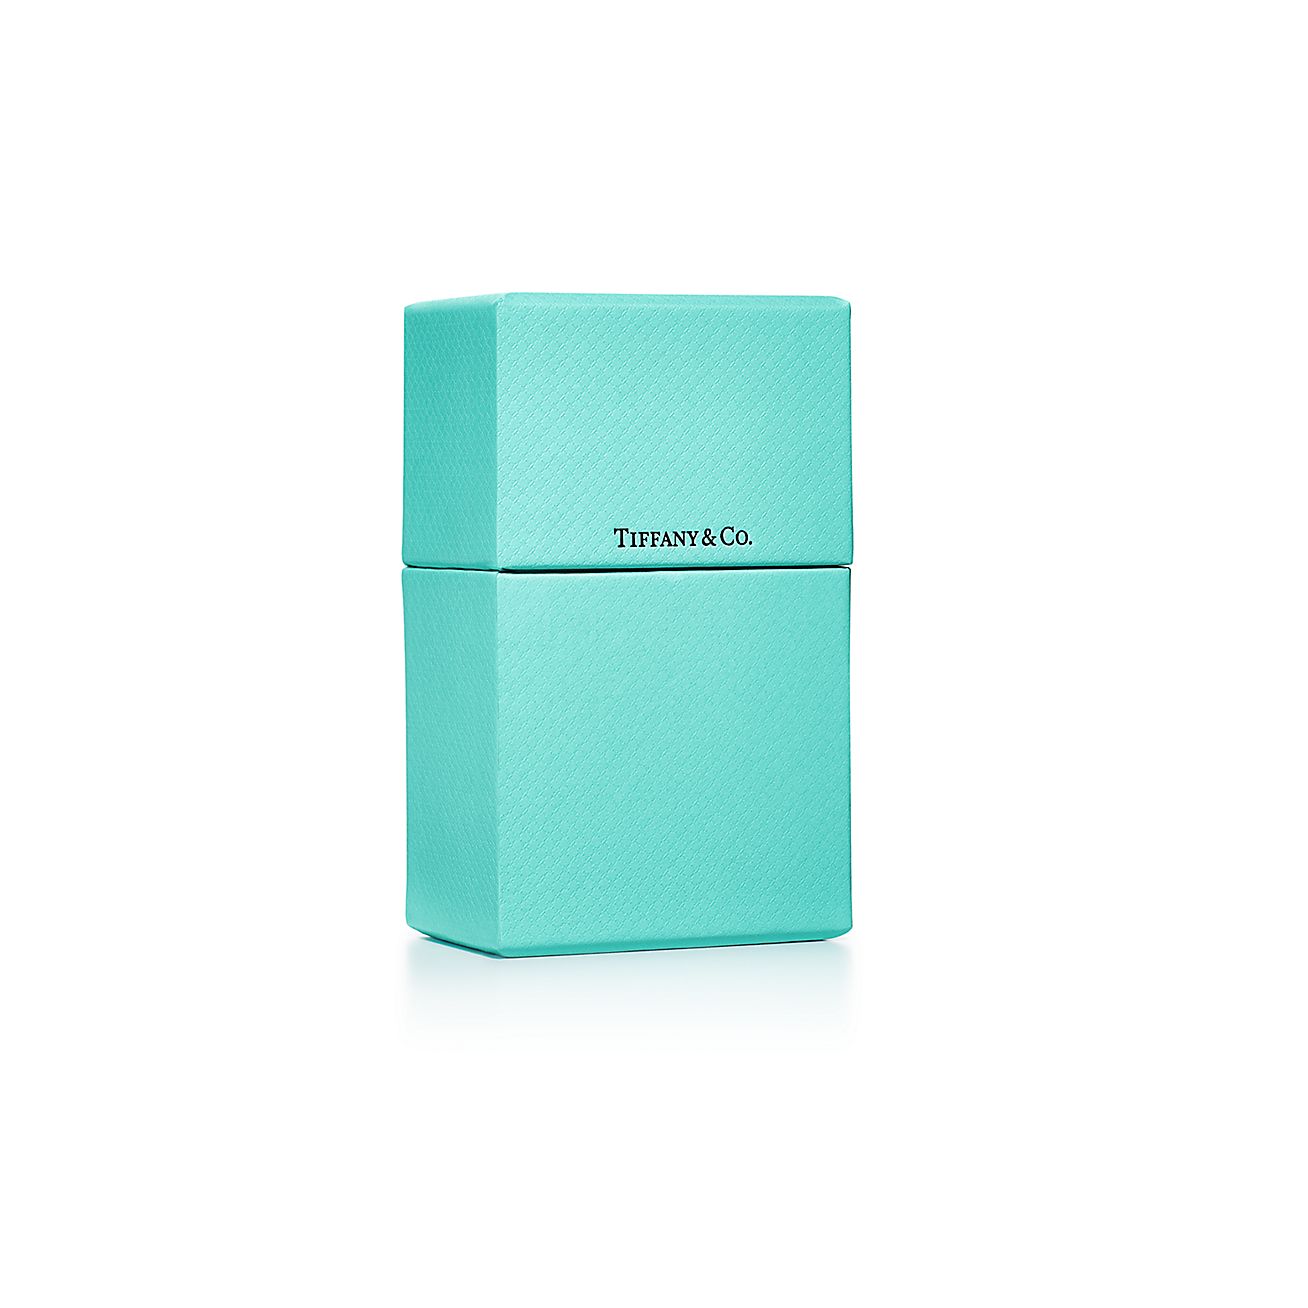 Tiffany Travel playing cards in a Tiffany Blue® box.